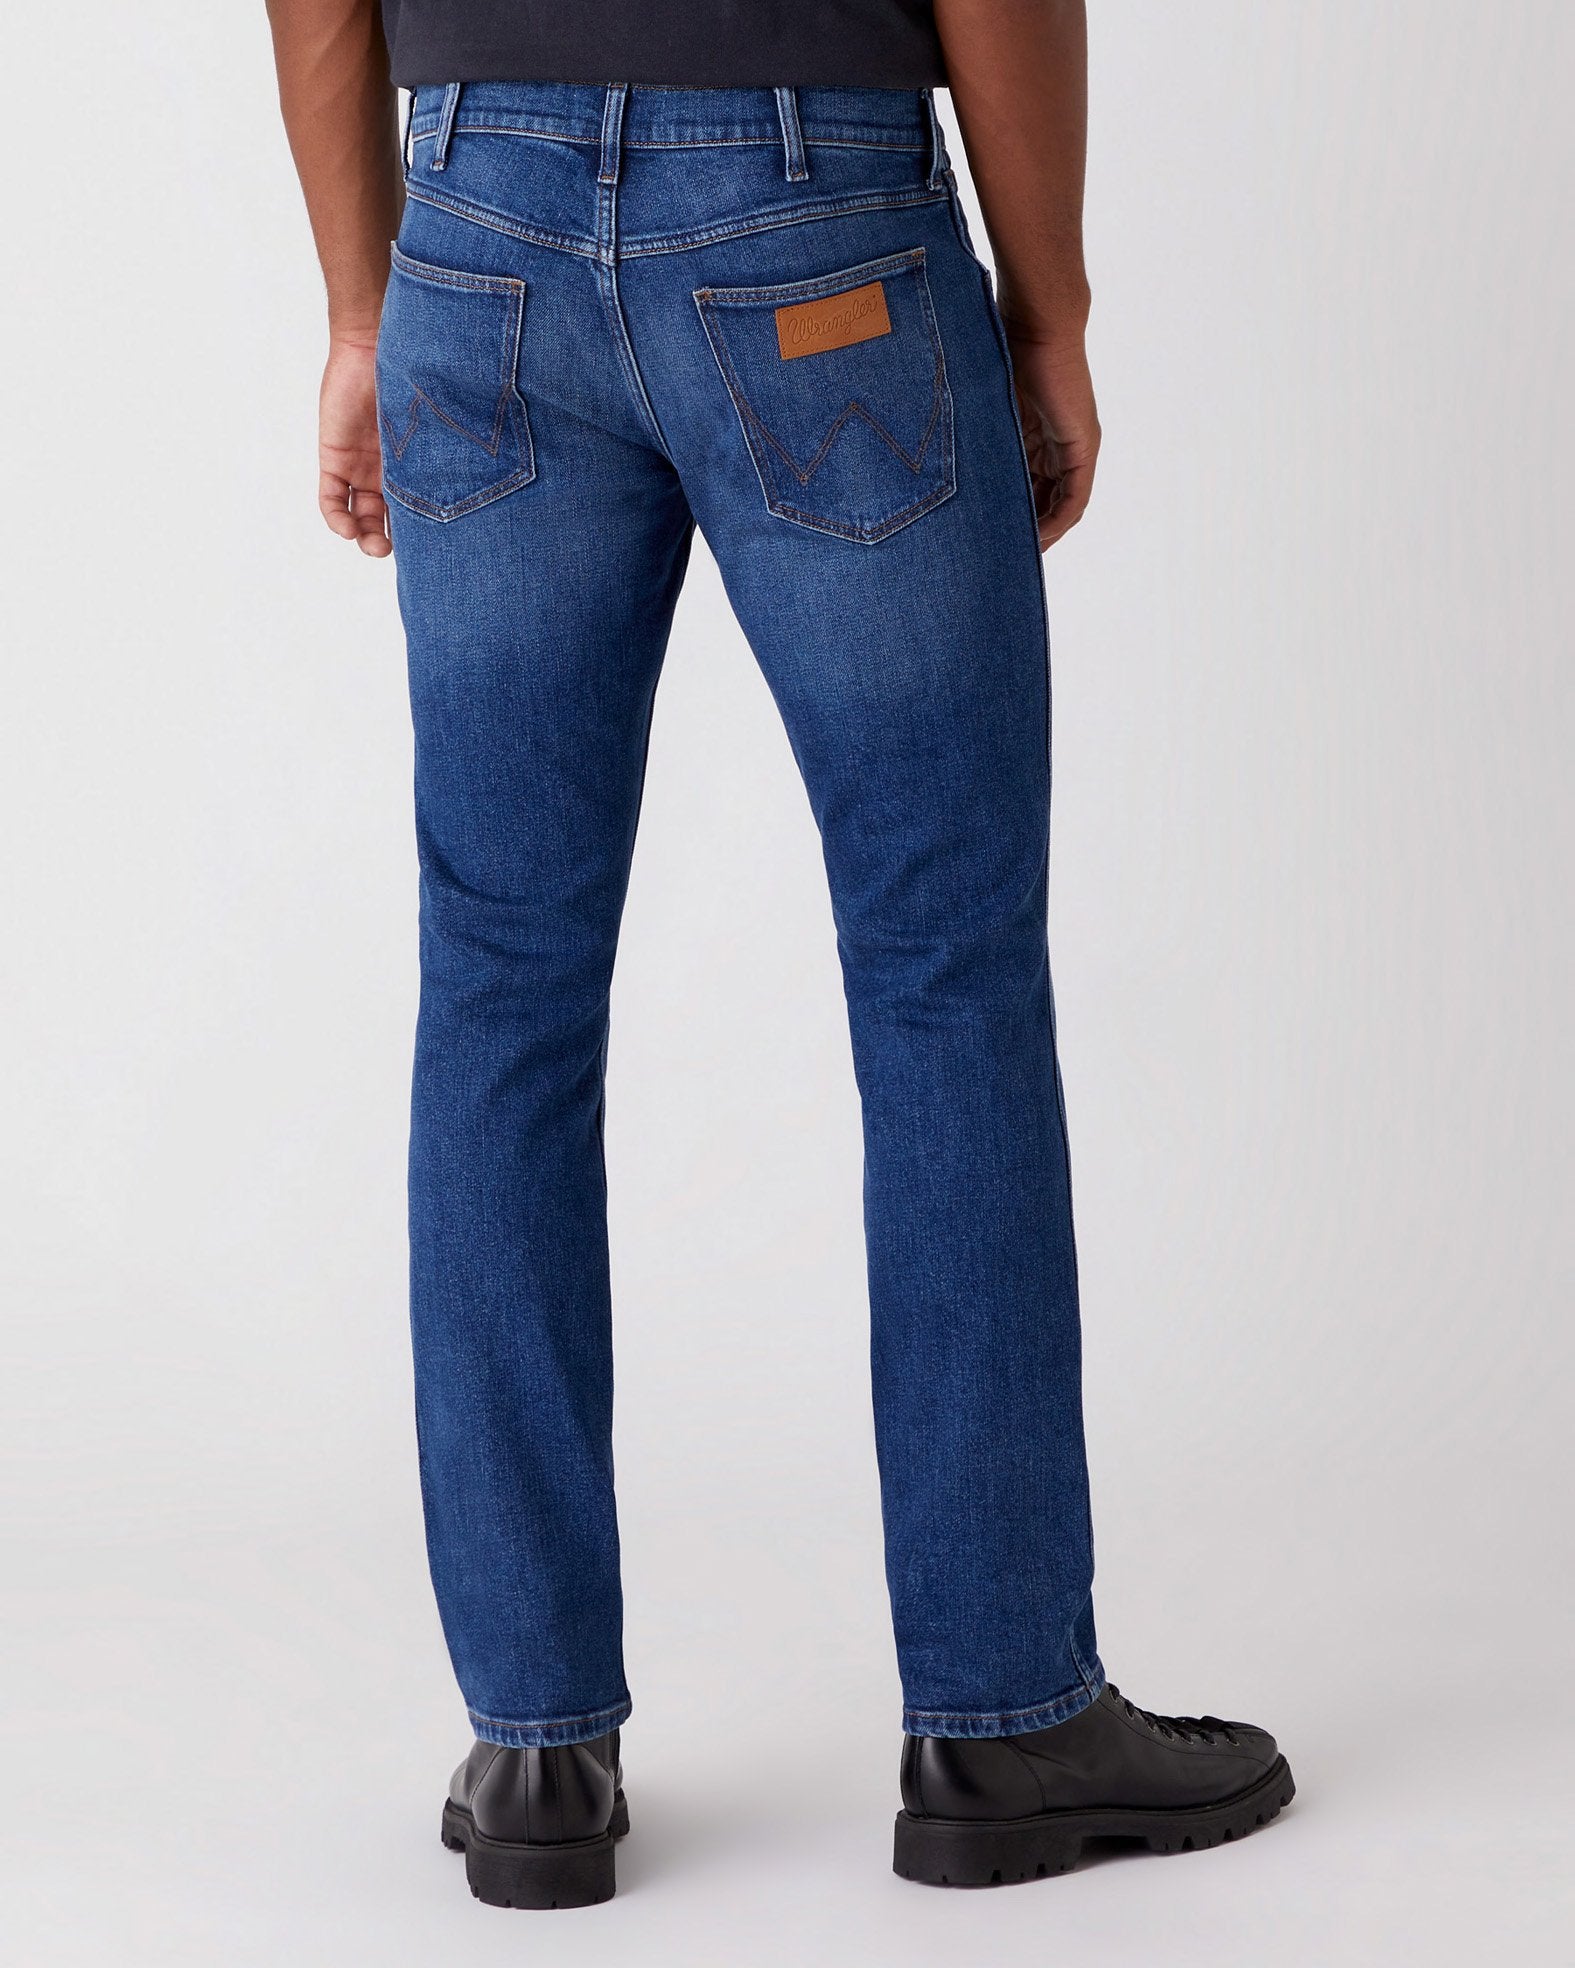 Wrangler Greensboro Regular Fit Mens Jeans - Hard Edge